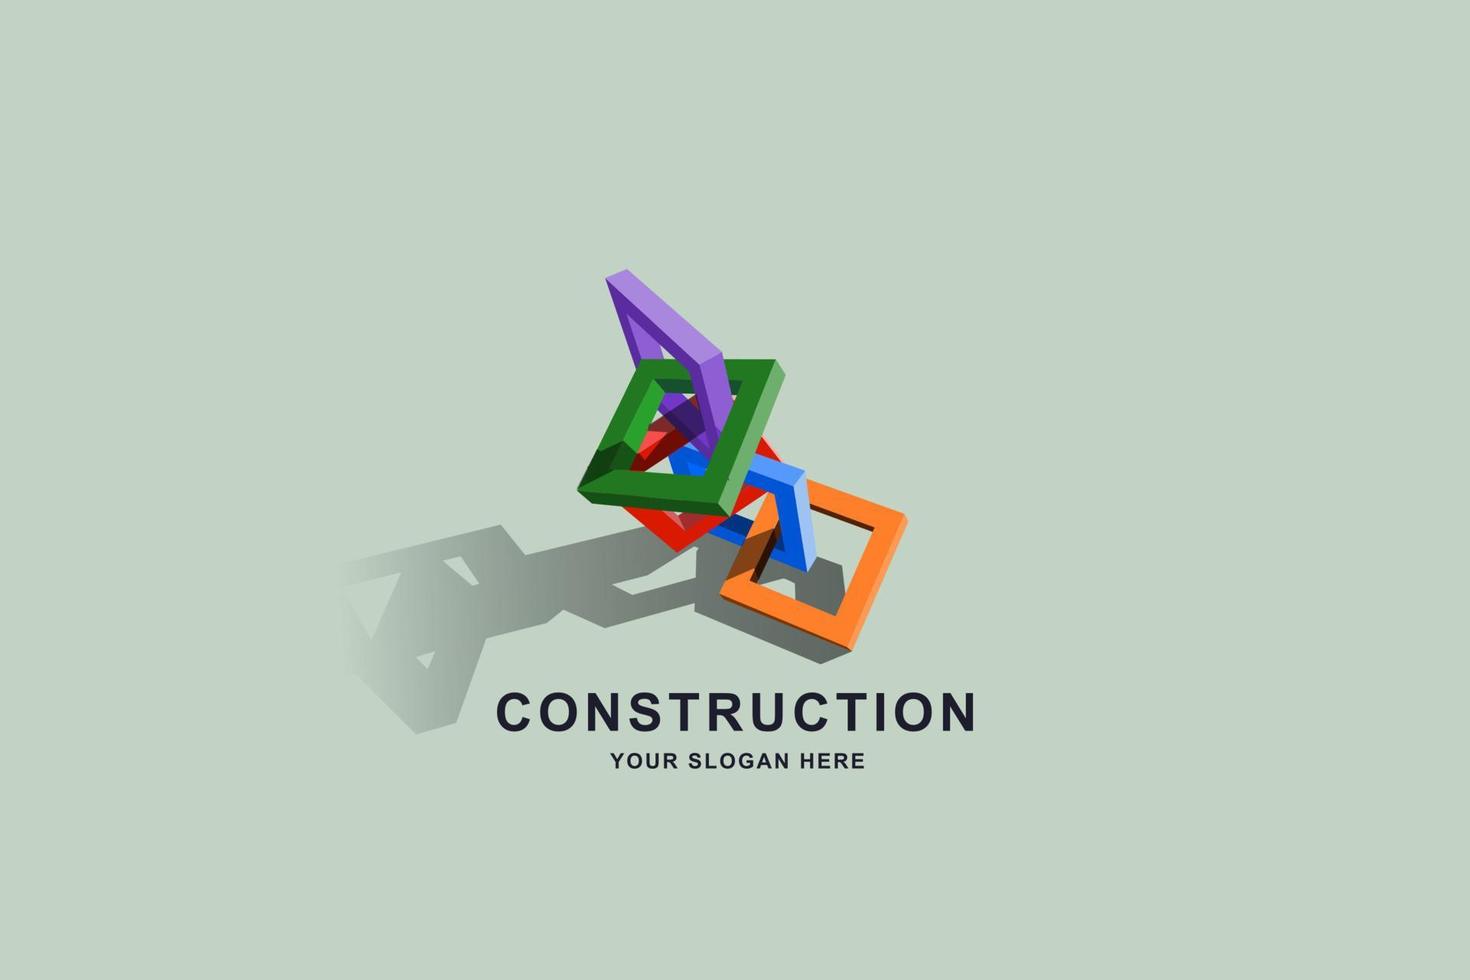 Construction buildings or 3D box frame square logo design template vector